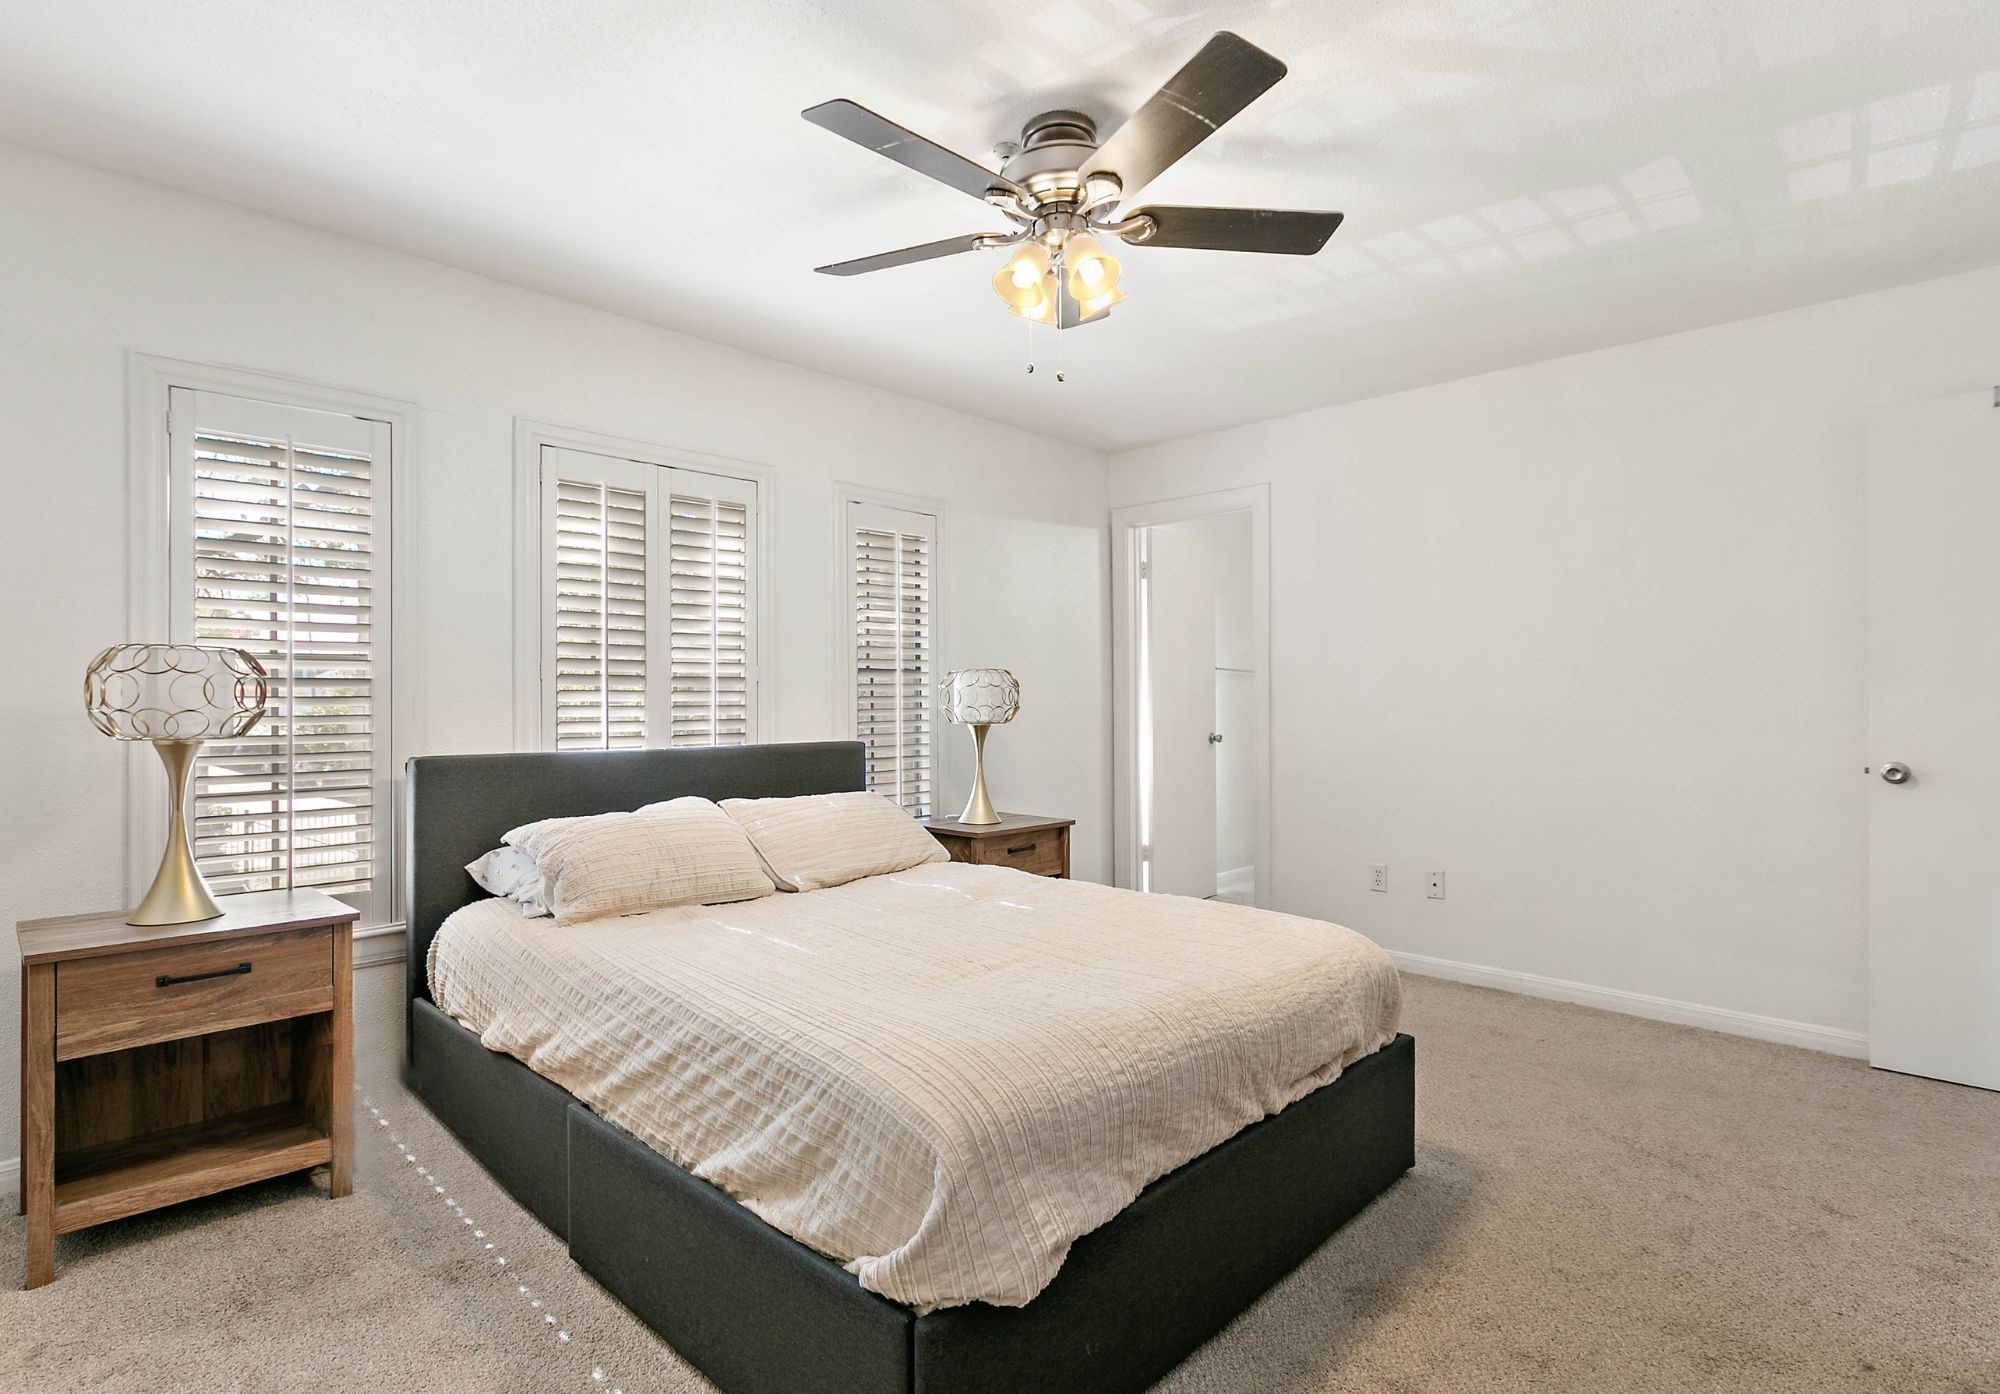 Primary bedroom enjoys Plantation shutters, plush carpet & a ceiling fan.